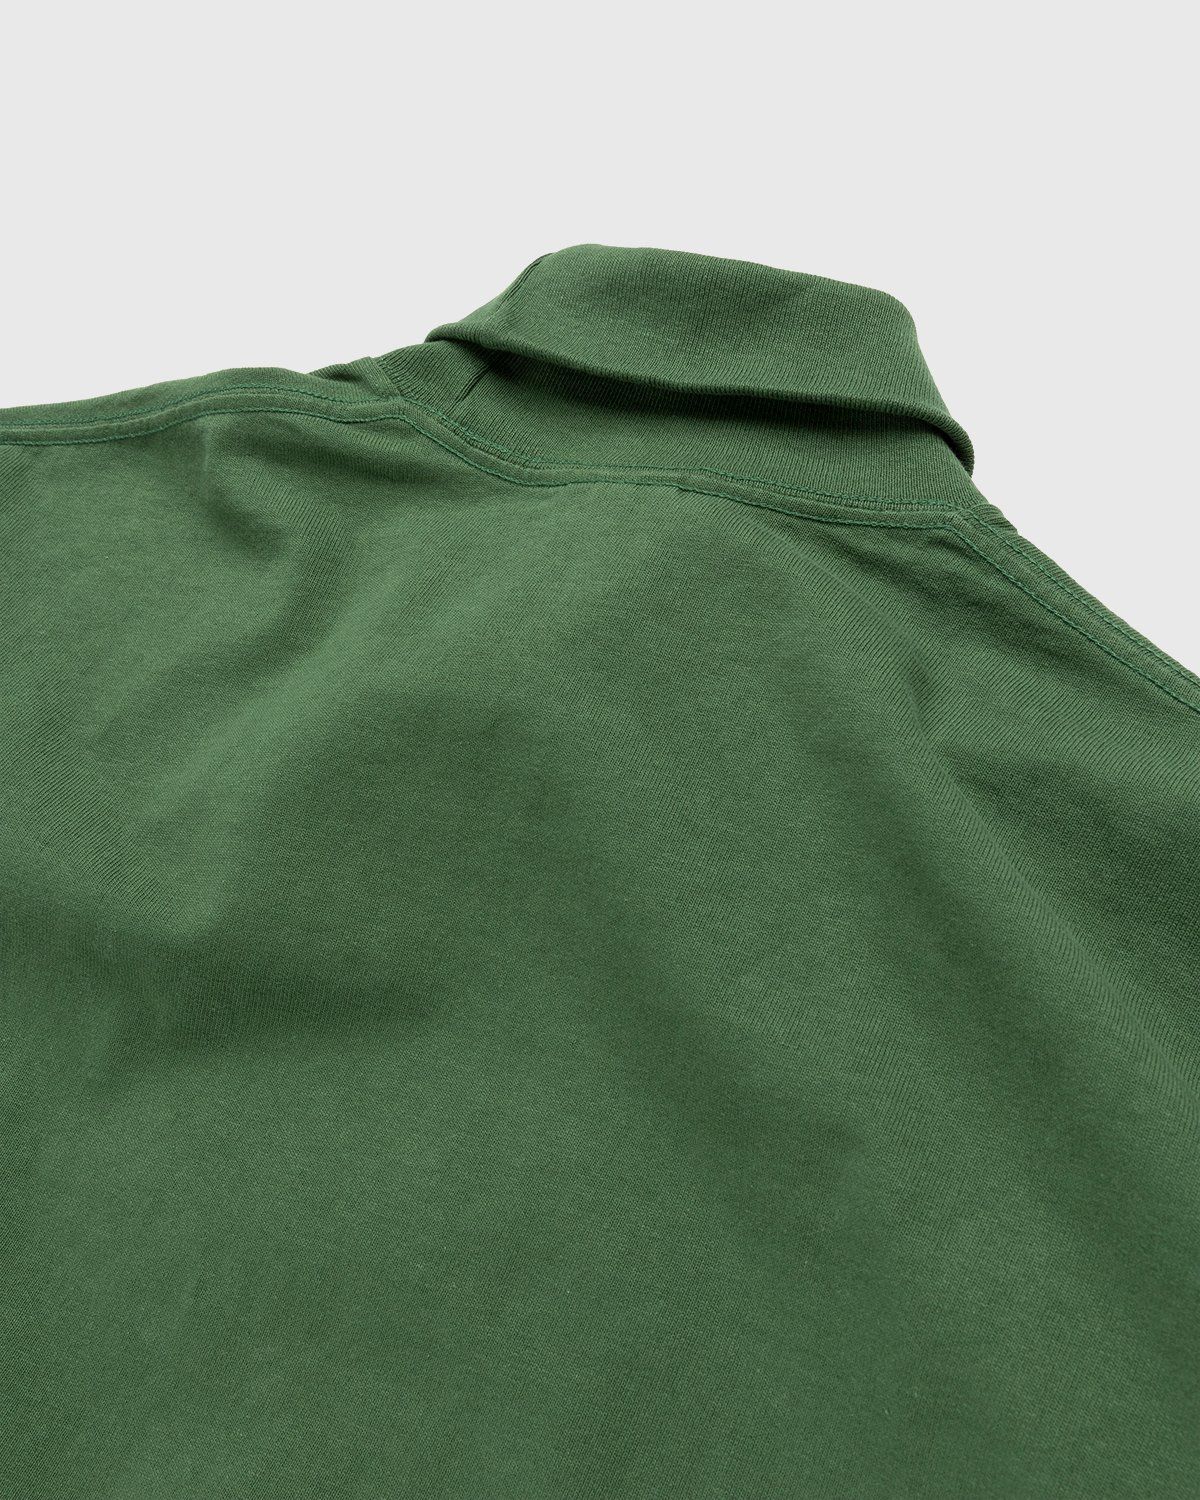 Highsnobiety – Heavy Staples Turtleneck Green - Sweats - Green - Image 3